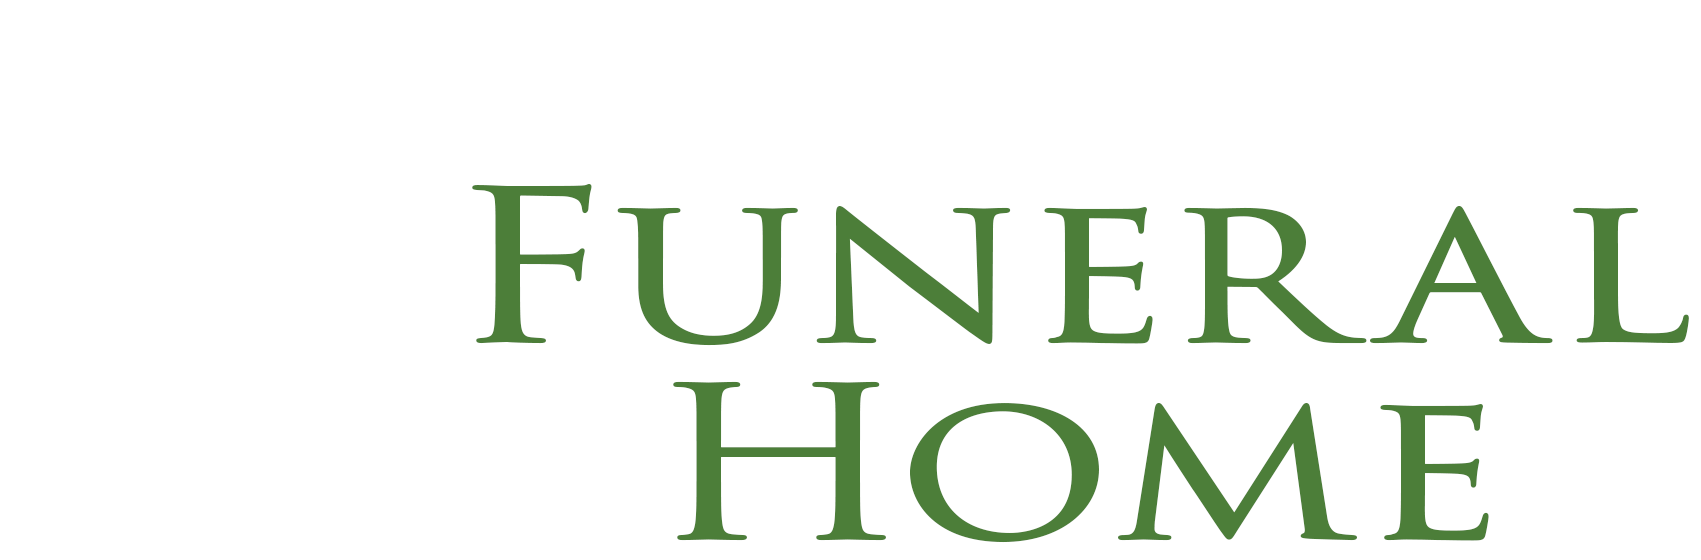 Cochrane Country Funeral Home Logo